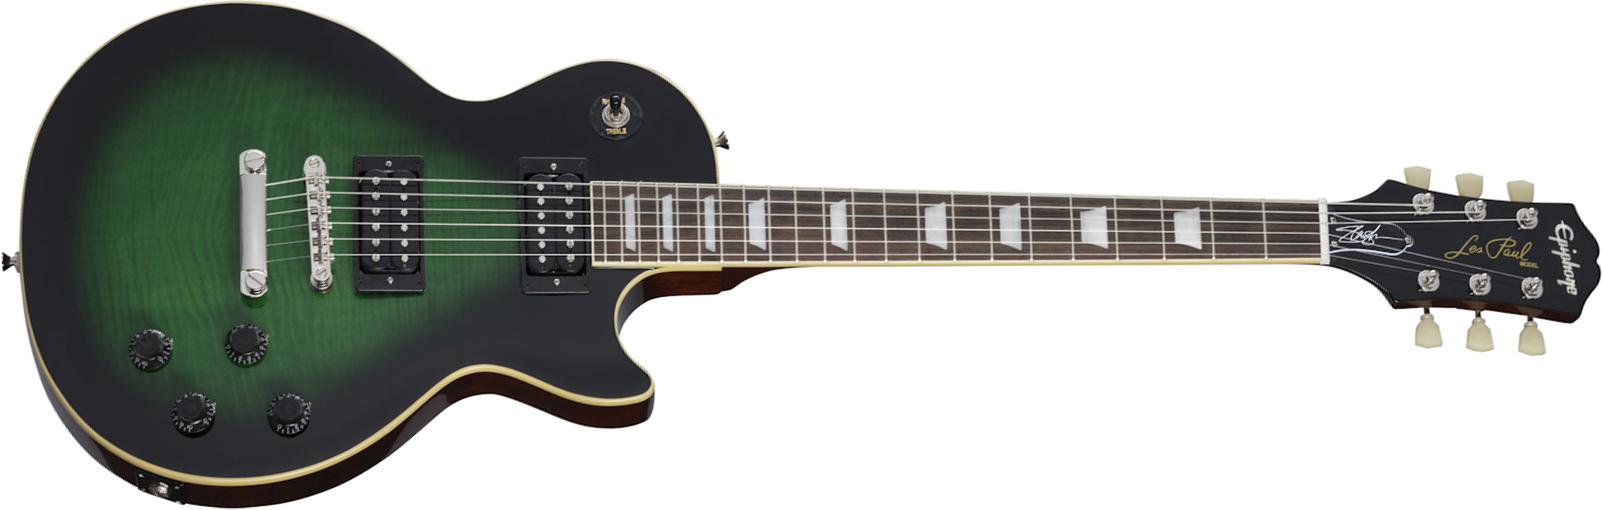 Epiphone Slash Les Paul Standard Signature 2h Ht Lau +etui - Anaconda Burst - Single cut electric guitar - Main picture